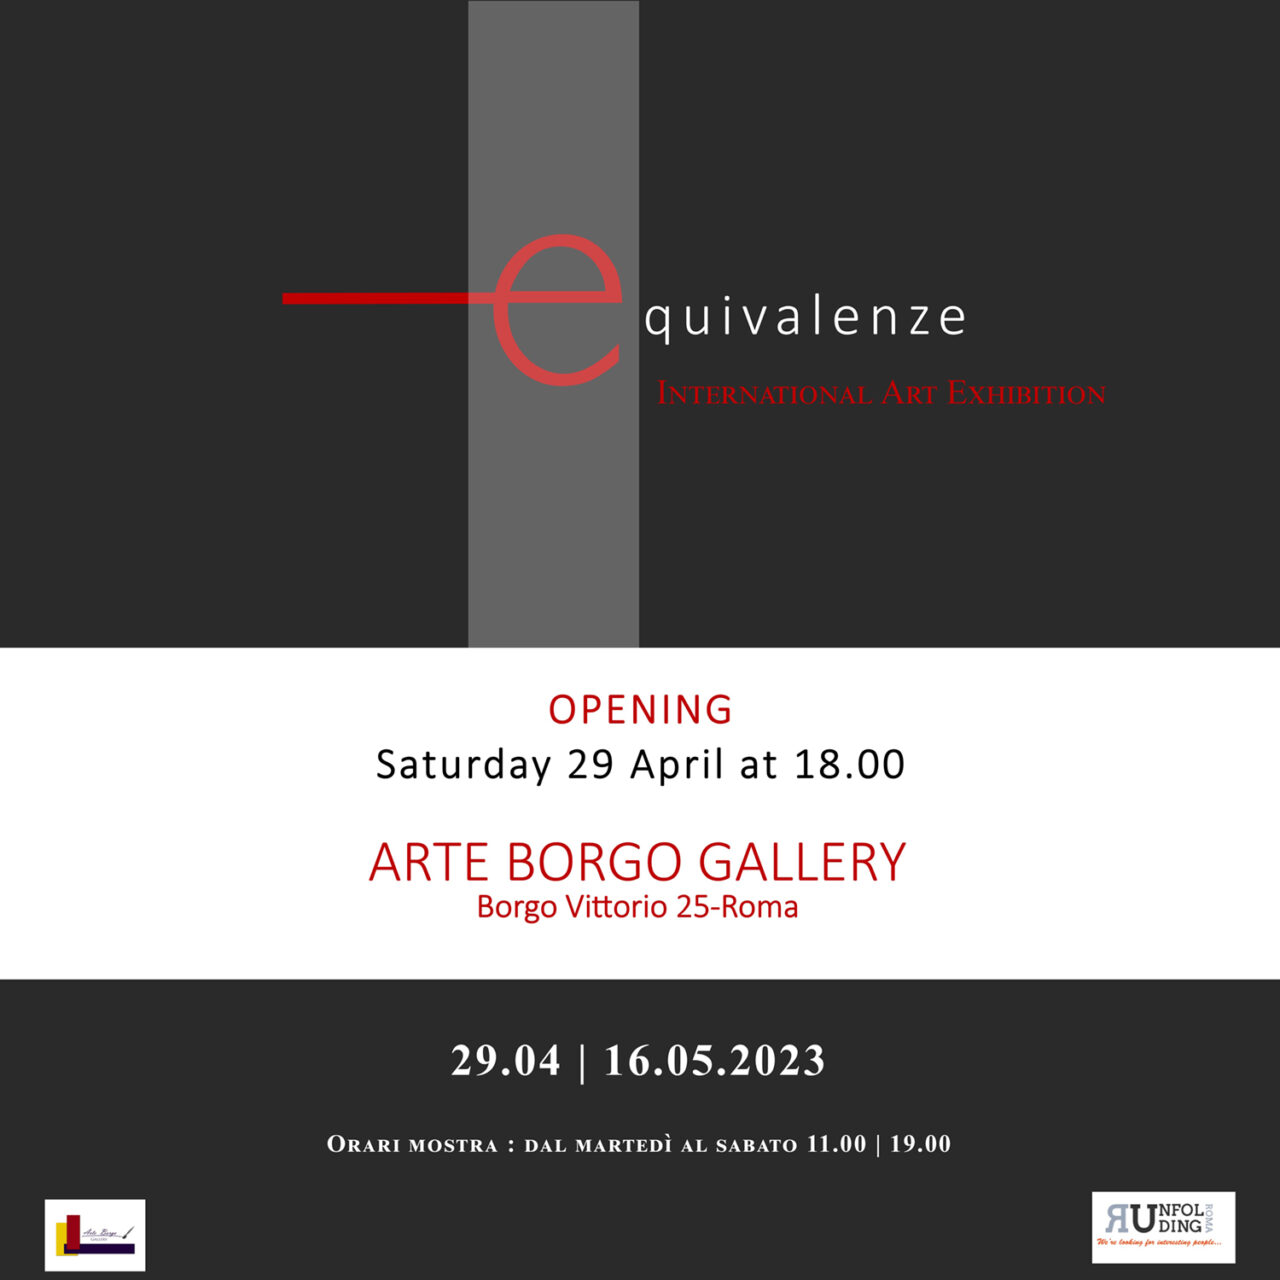 INVITATION  EQUIVALENZE  International Art Exhibition